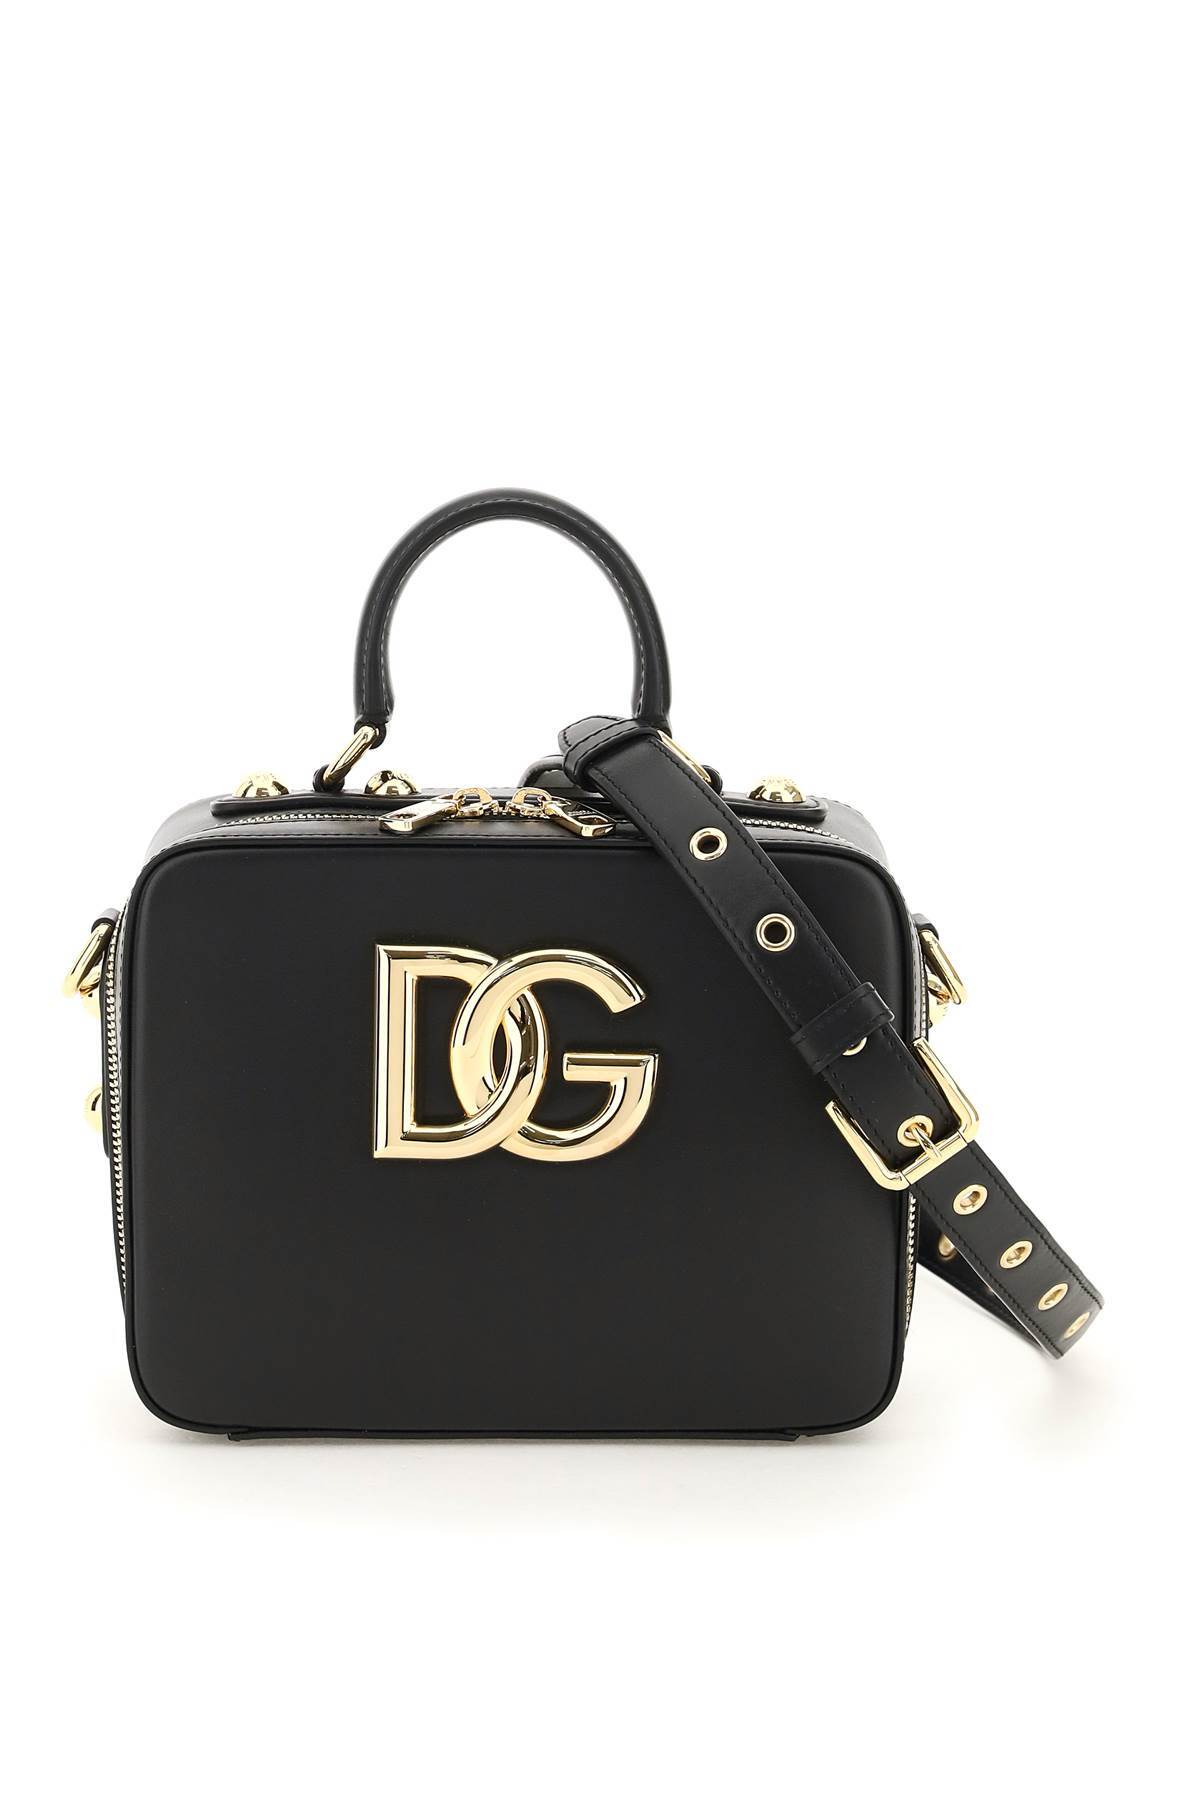 Dolce & Gabbana 3.5 Top Handle Bag in nero